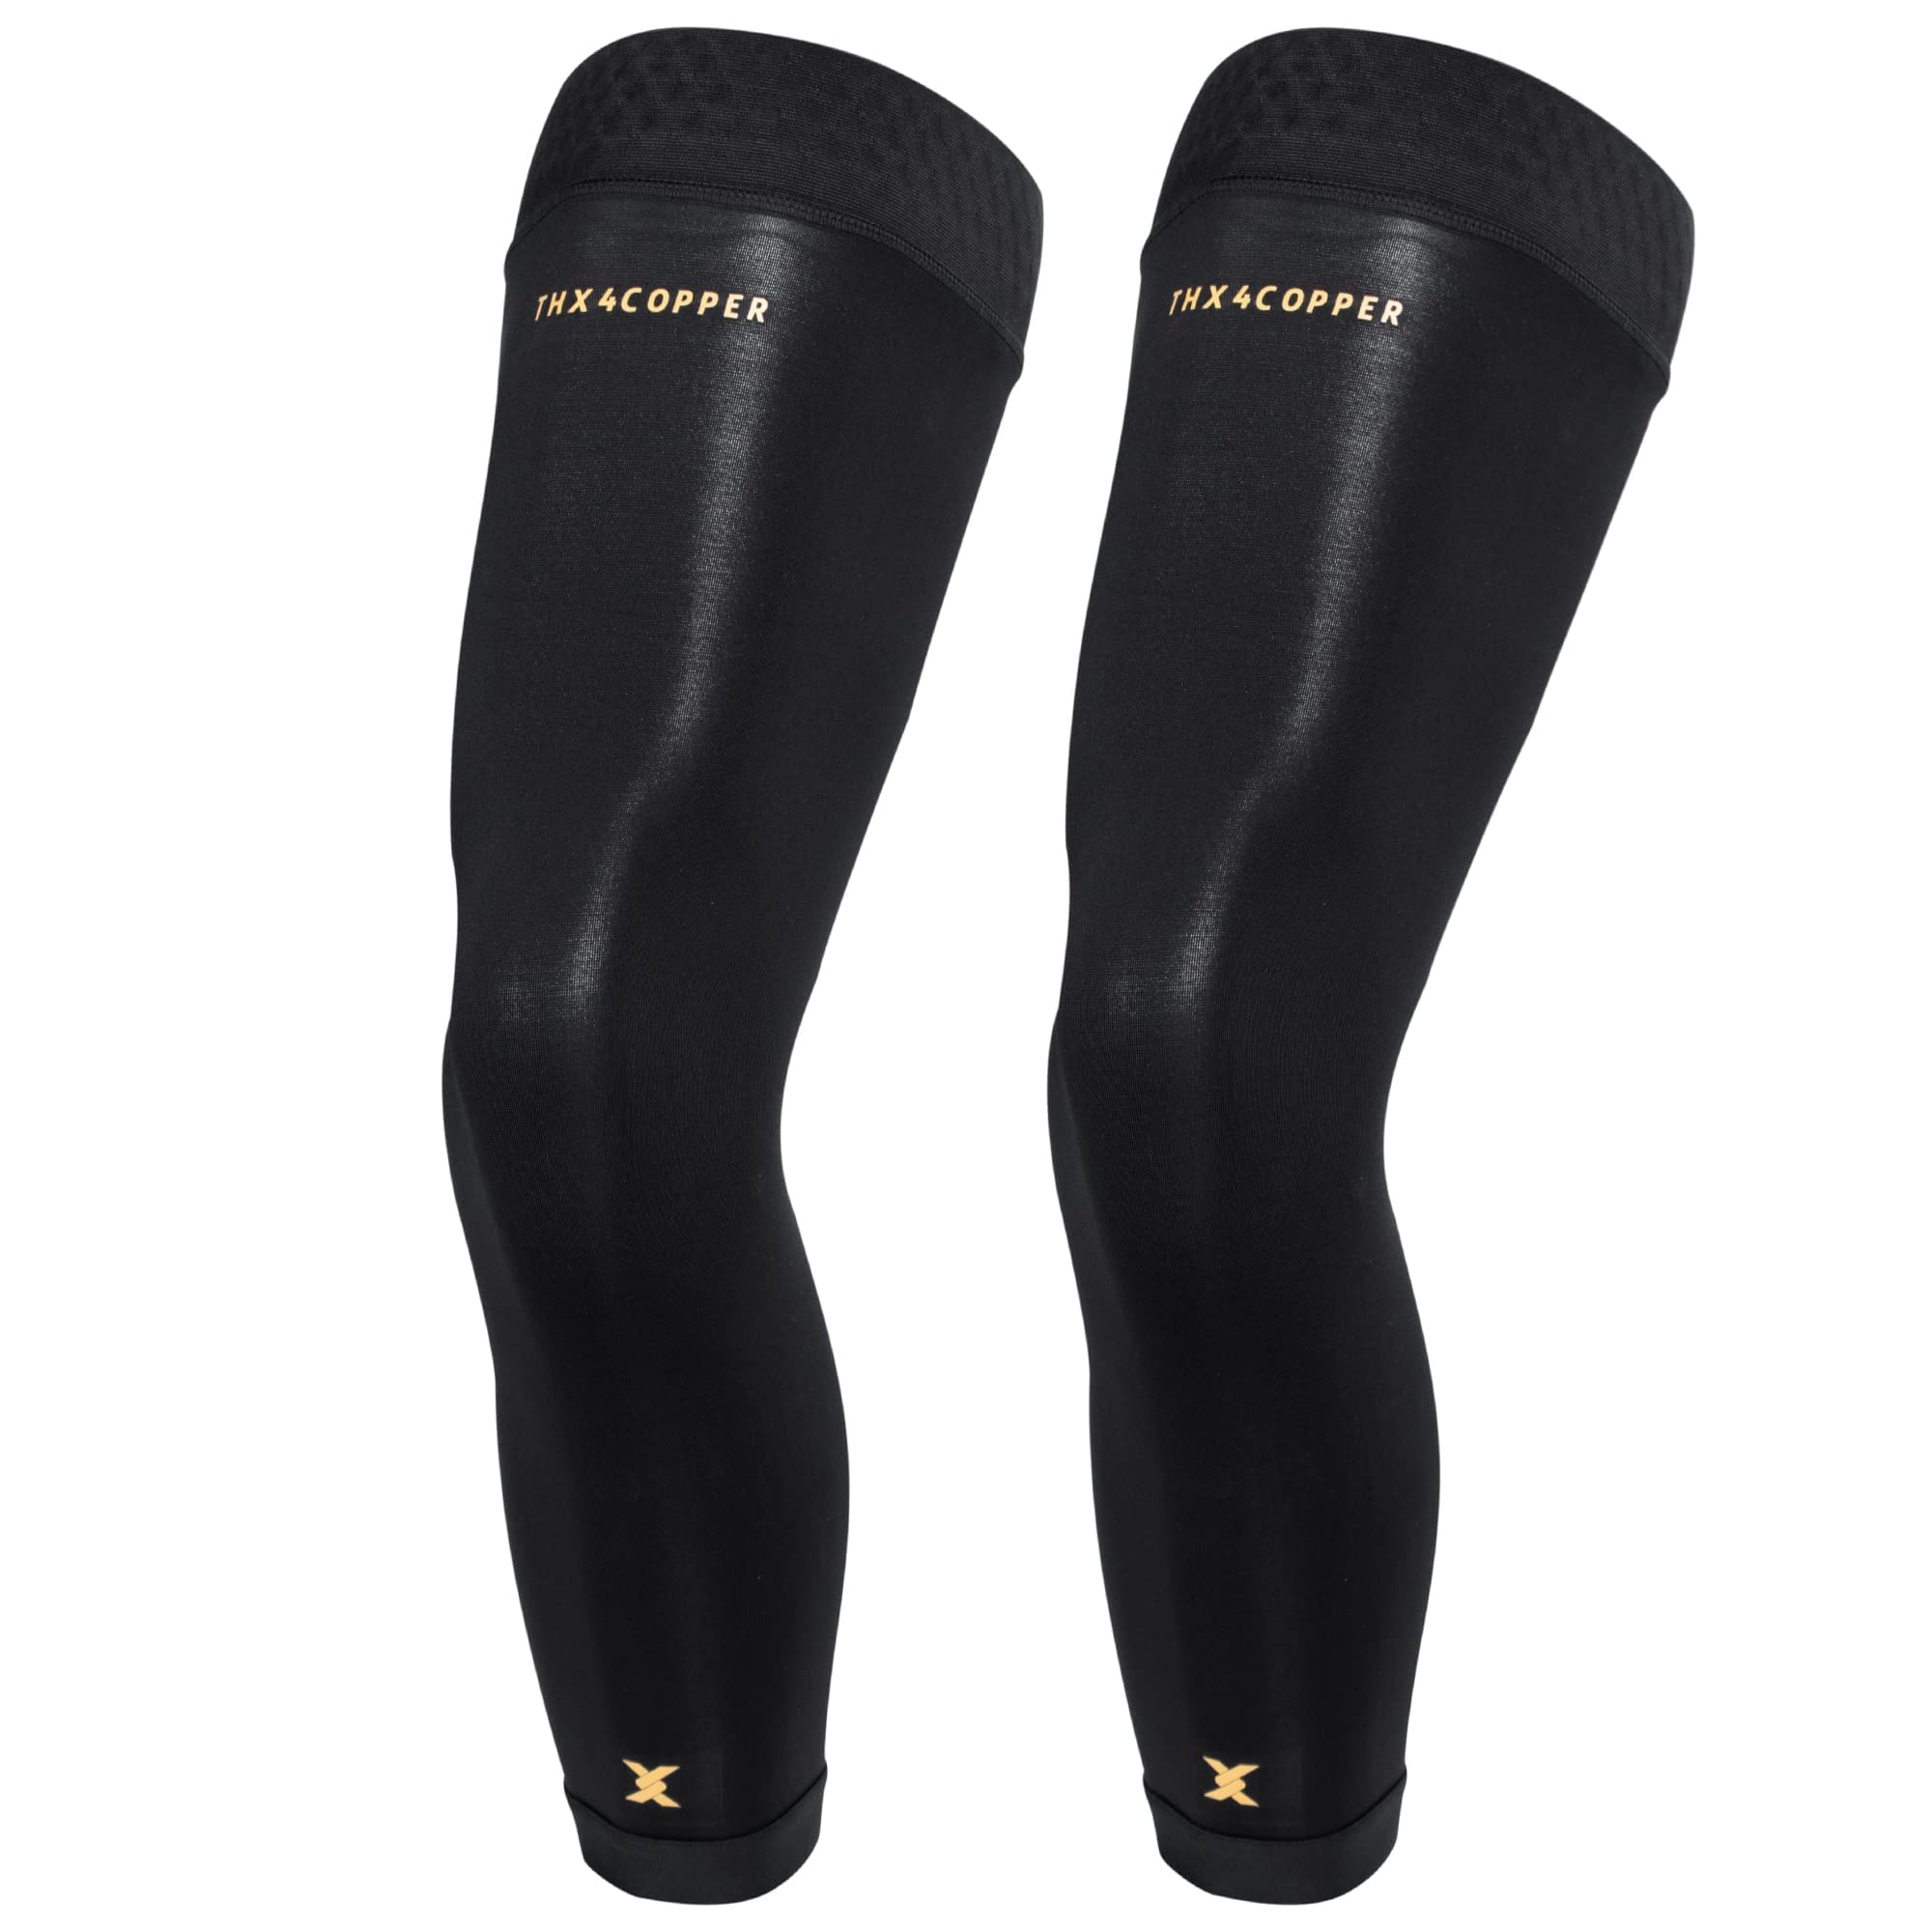 Thx4COPPER Full Leg Compression Sleeves Anti Slip Long Leg Knee